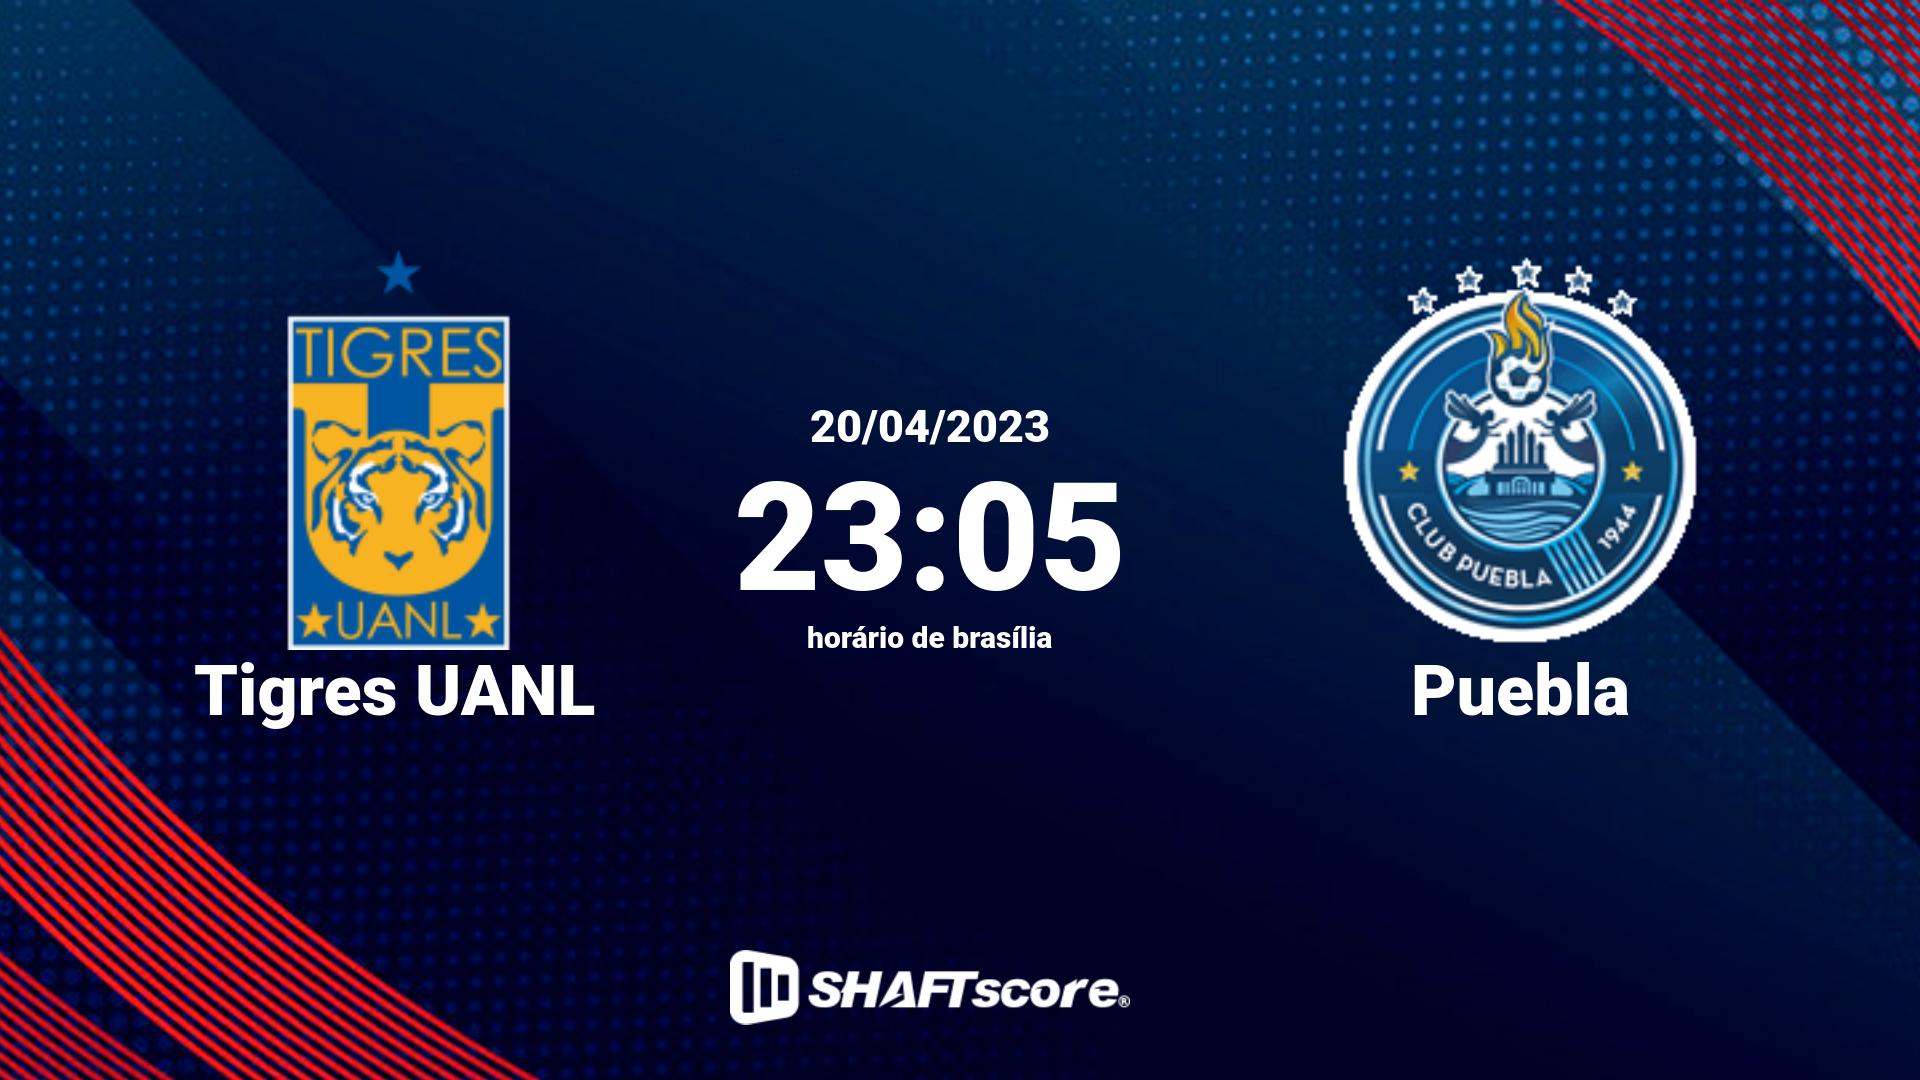 Estatísticas do jogo Tigres UANL vs Puebla 20.04 23:05